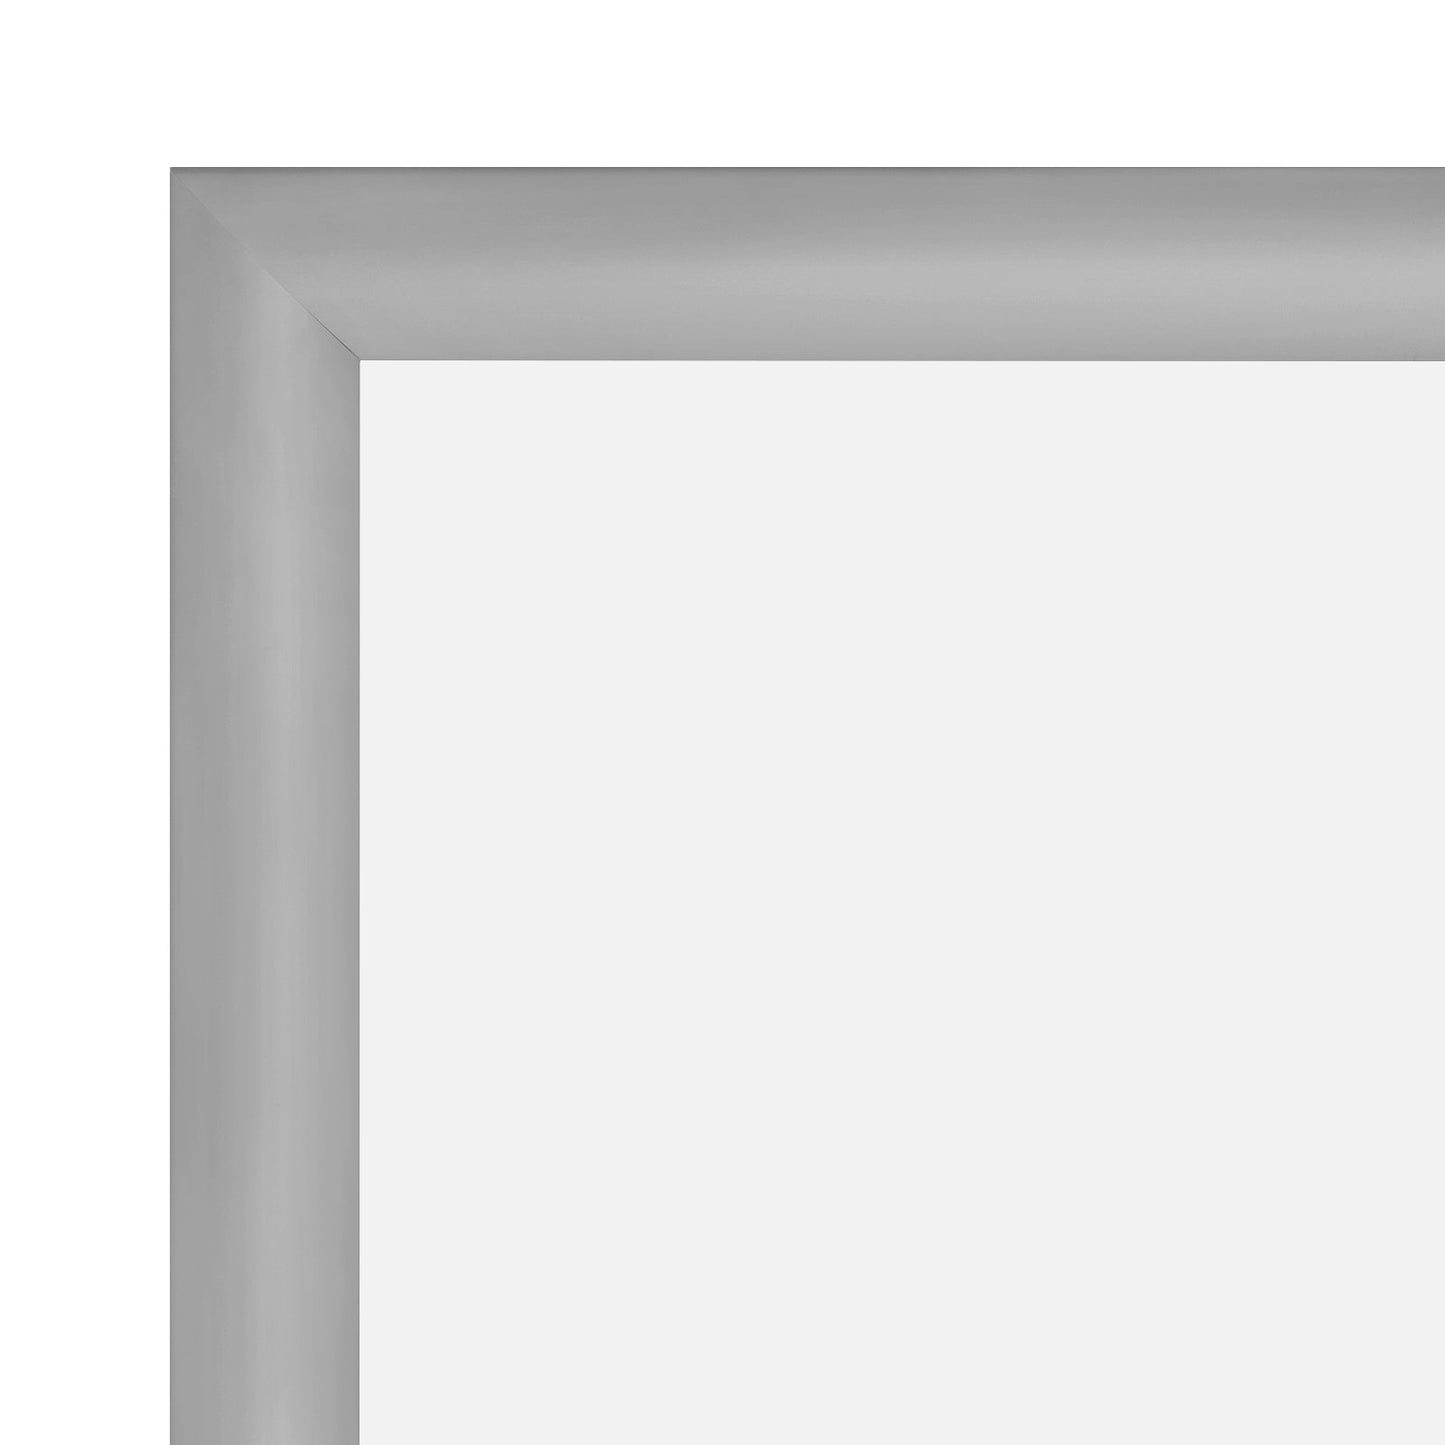 A1 Silver SnapeZo® Snap Frame - 1.2" Profile - Snap Frames Direct